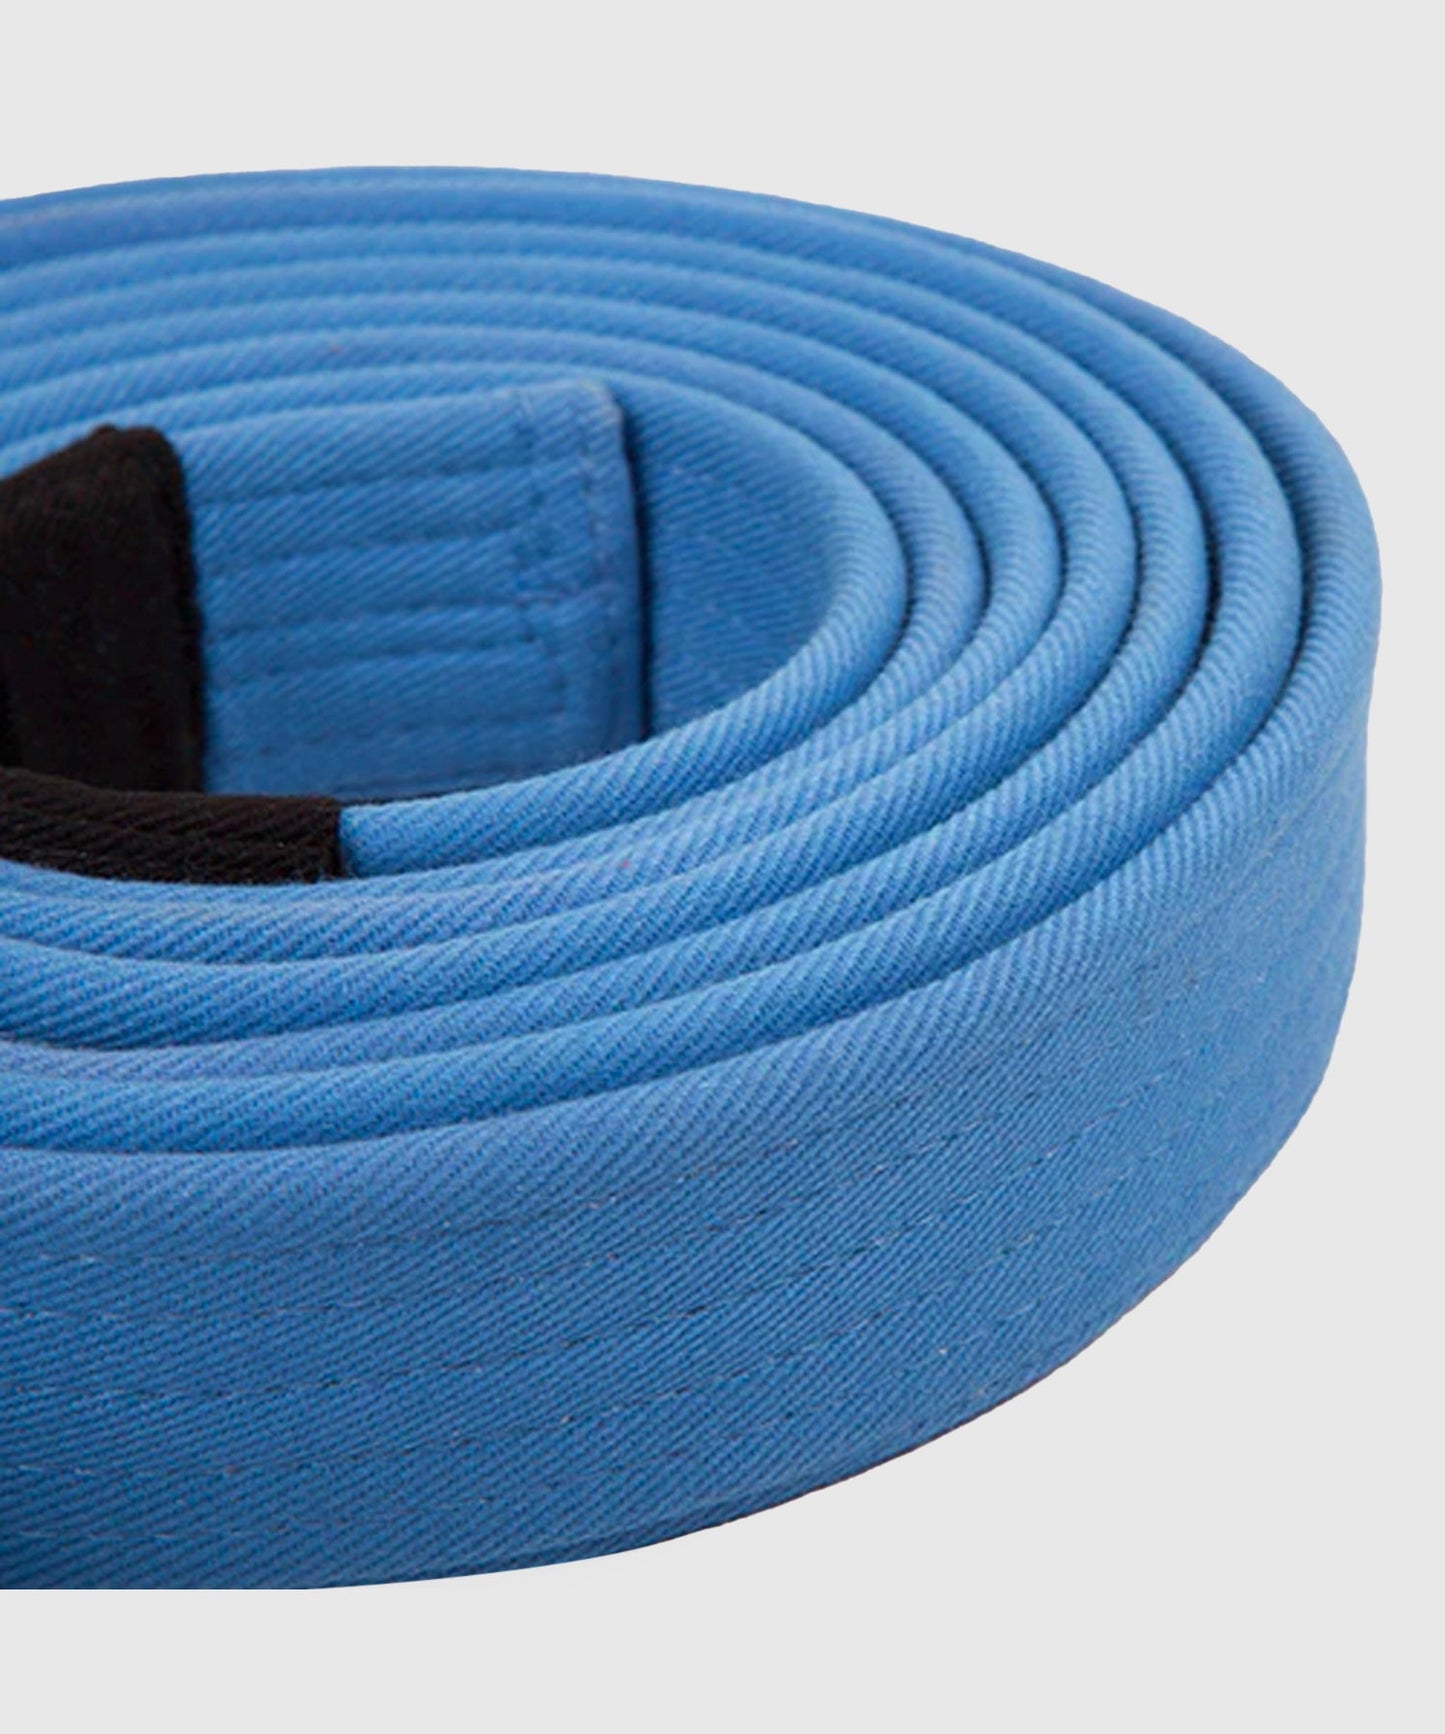 Venum BJJ Belt - Blue